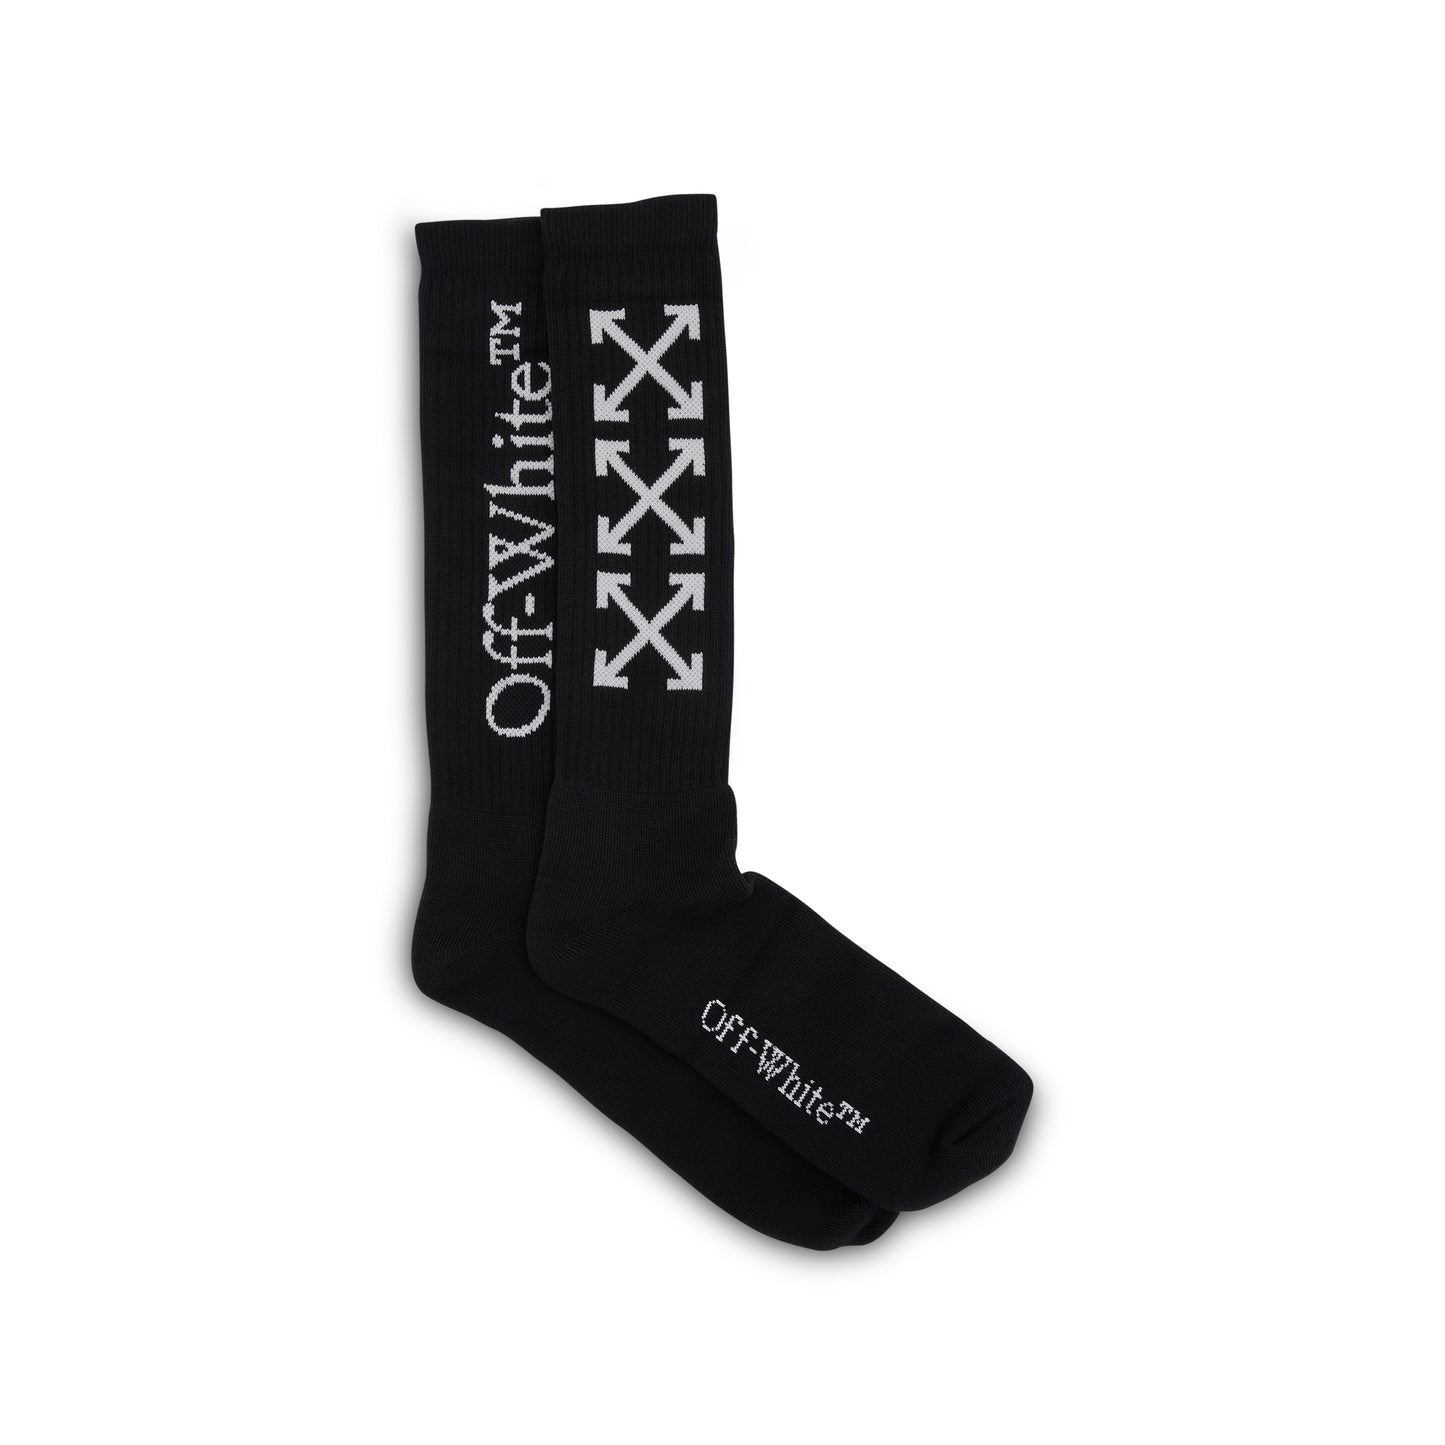 Arrow Bookish Socks in Black/White